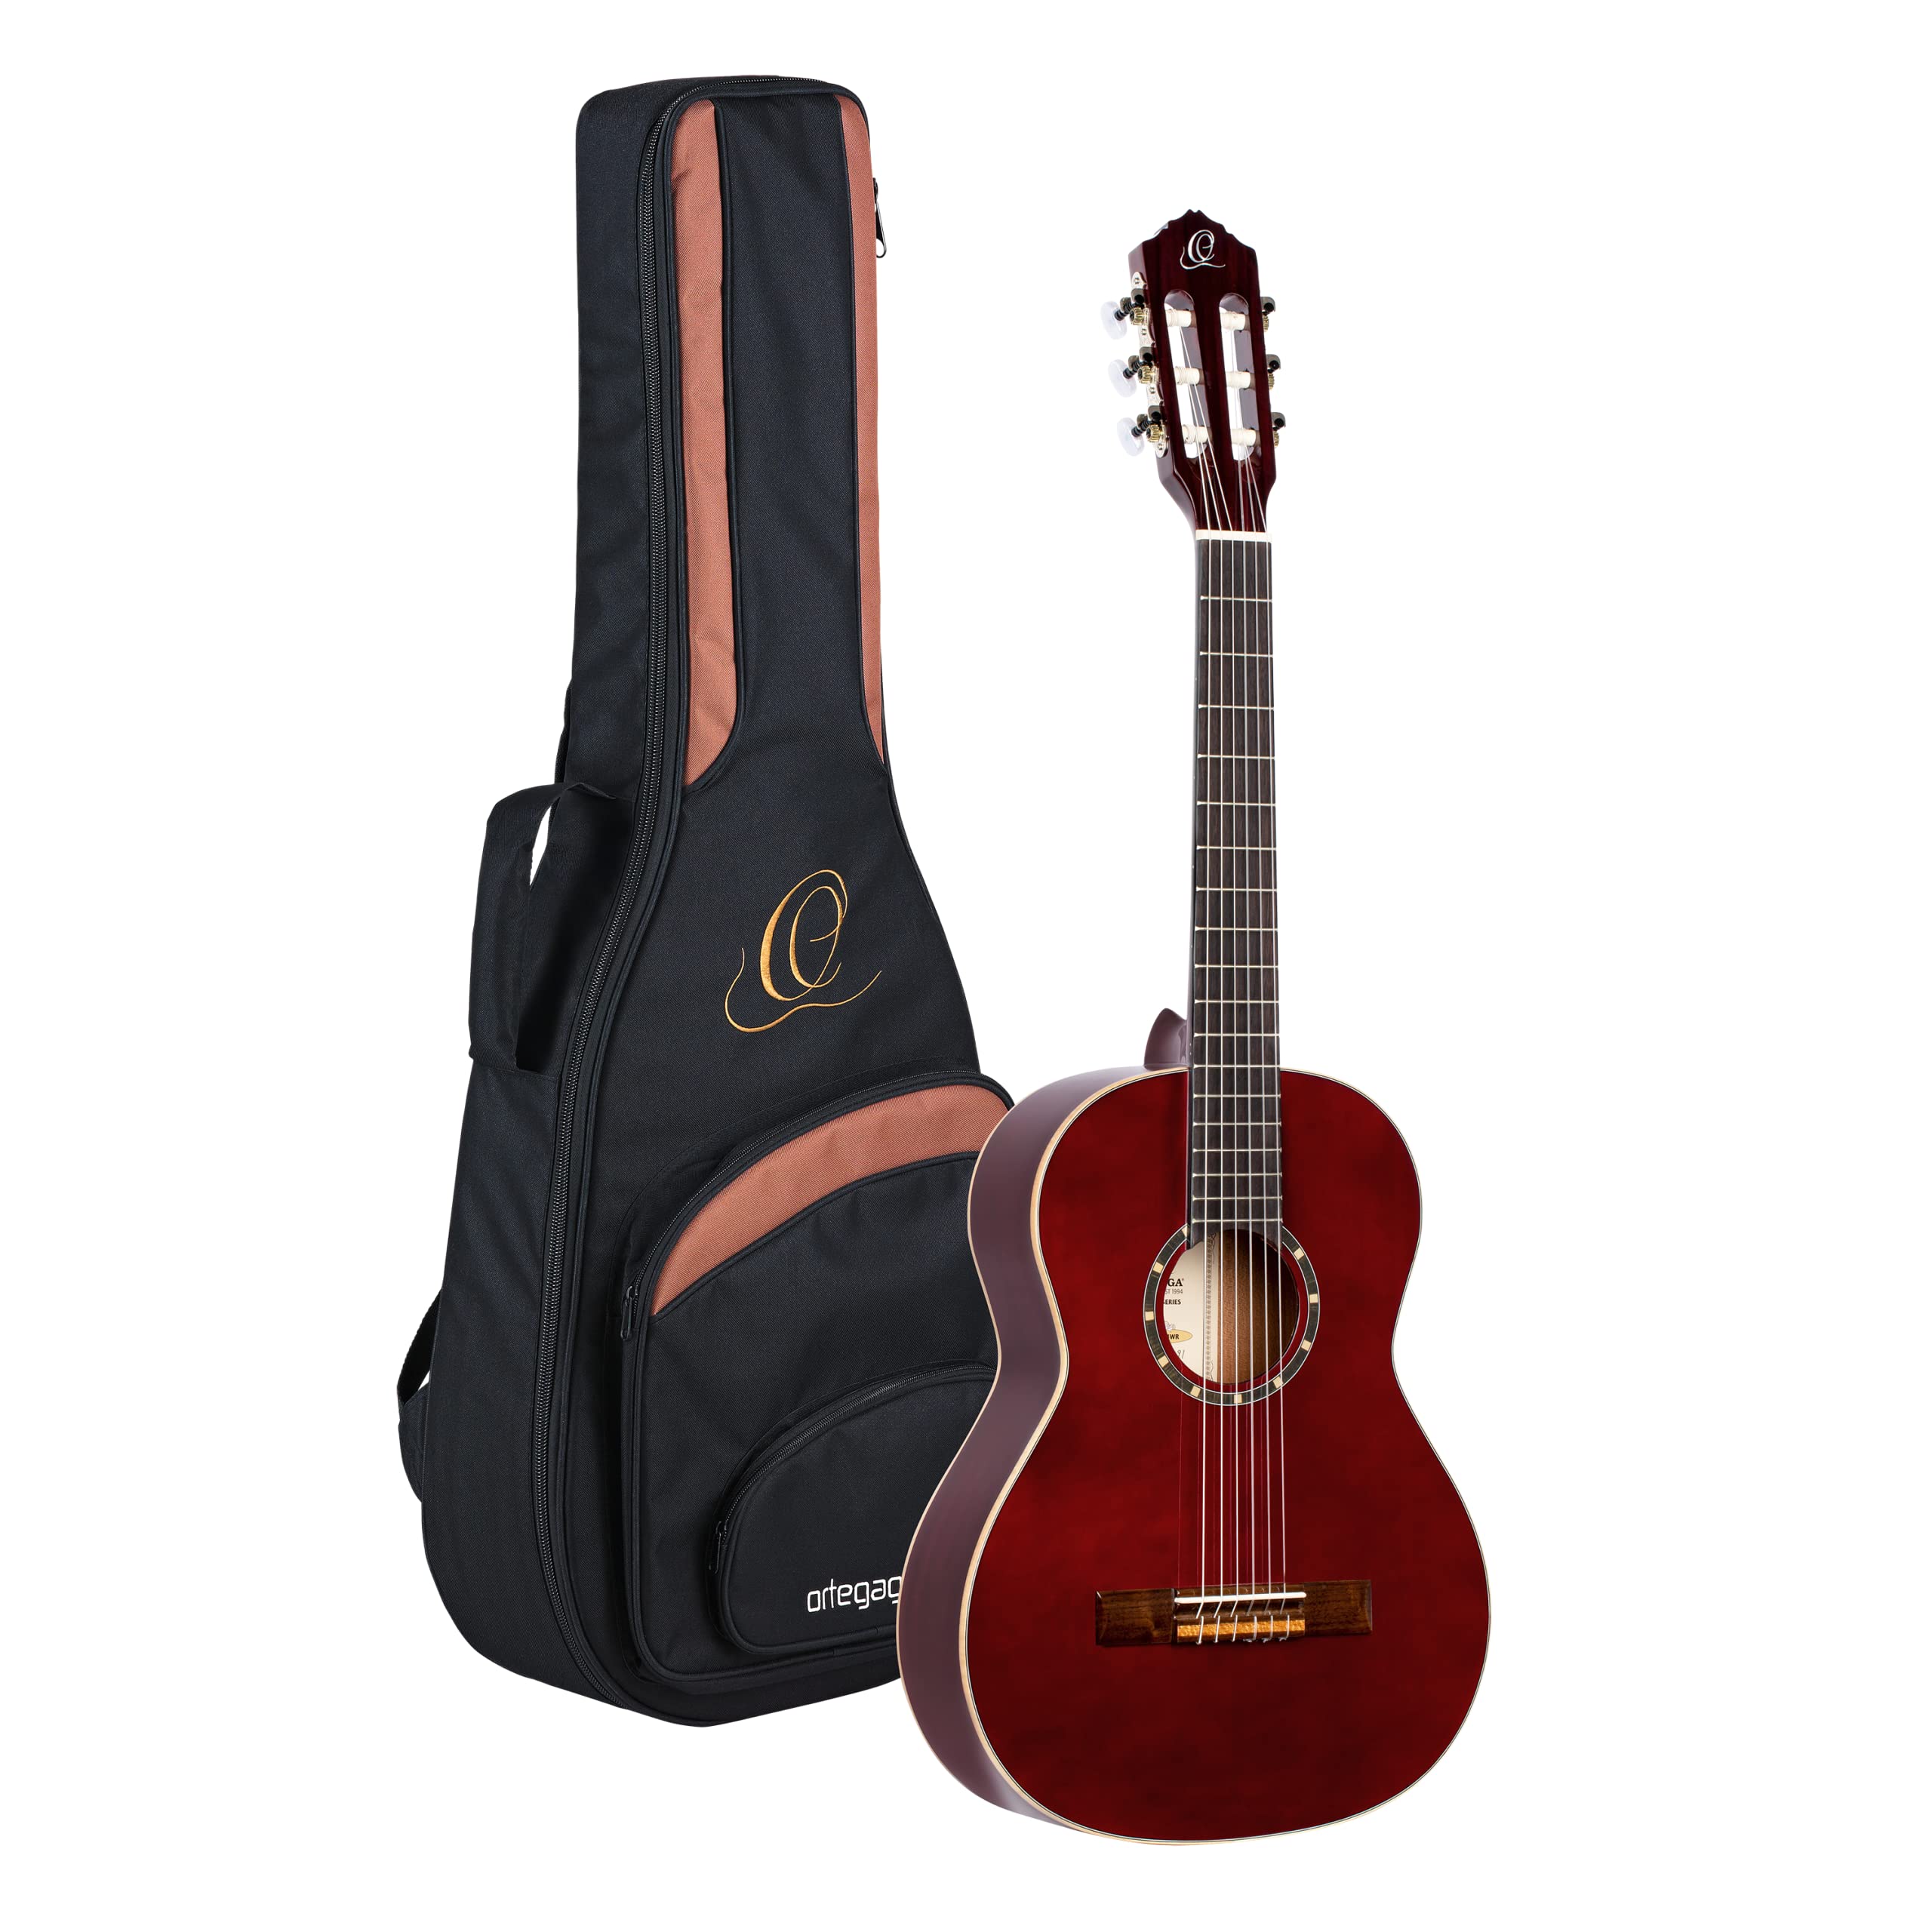 Ortega Guitars rote Konzertgitarre 3/4-Größe - Family Series - inklusive Gigbag - Mahagoni / Fichtendecke (R121-3/4WR)